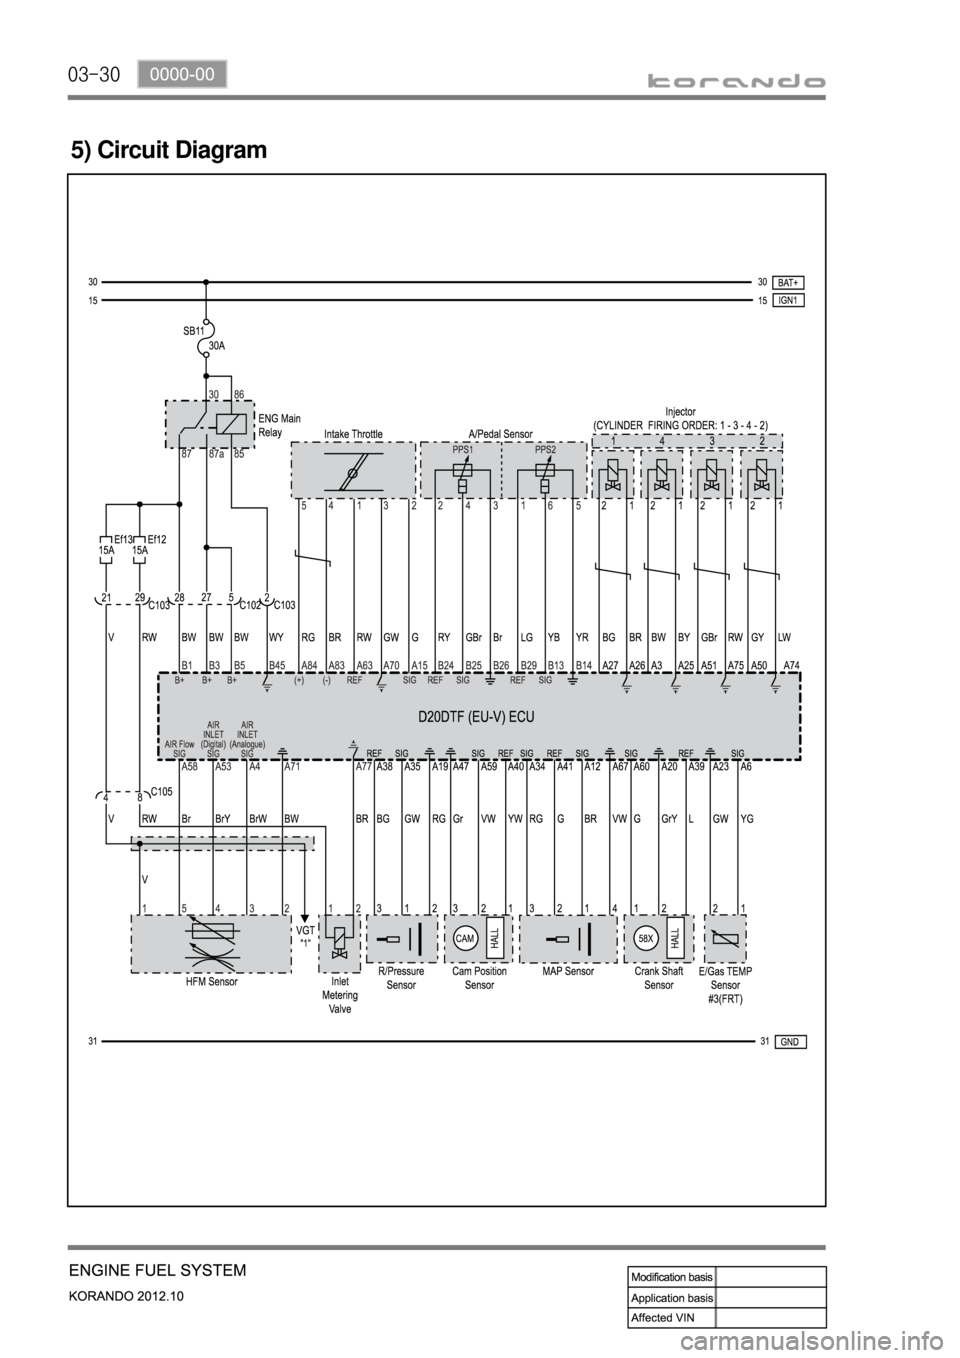 SSANGYONG KORANDO 2012  Service Manual 03-30
5) Circuit Diagram 